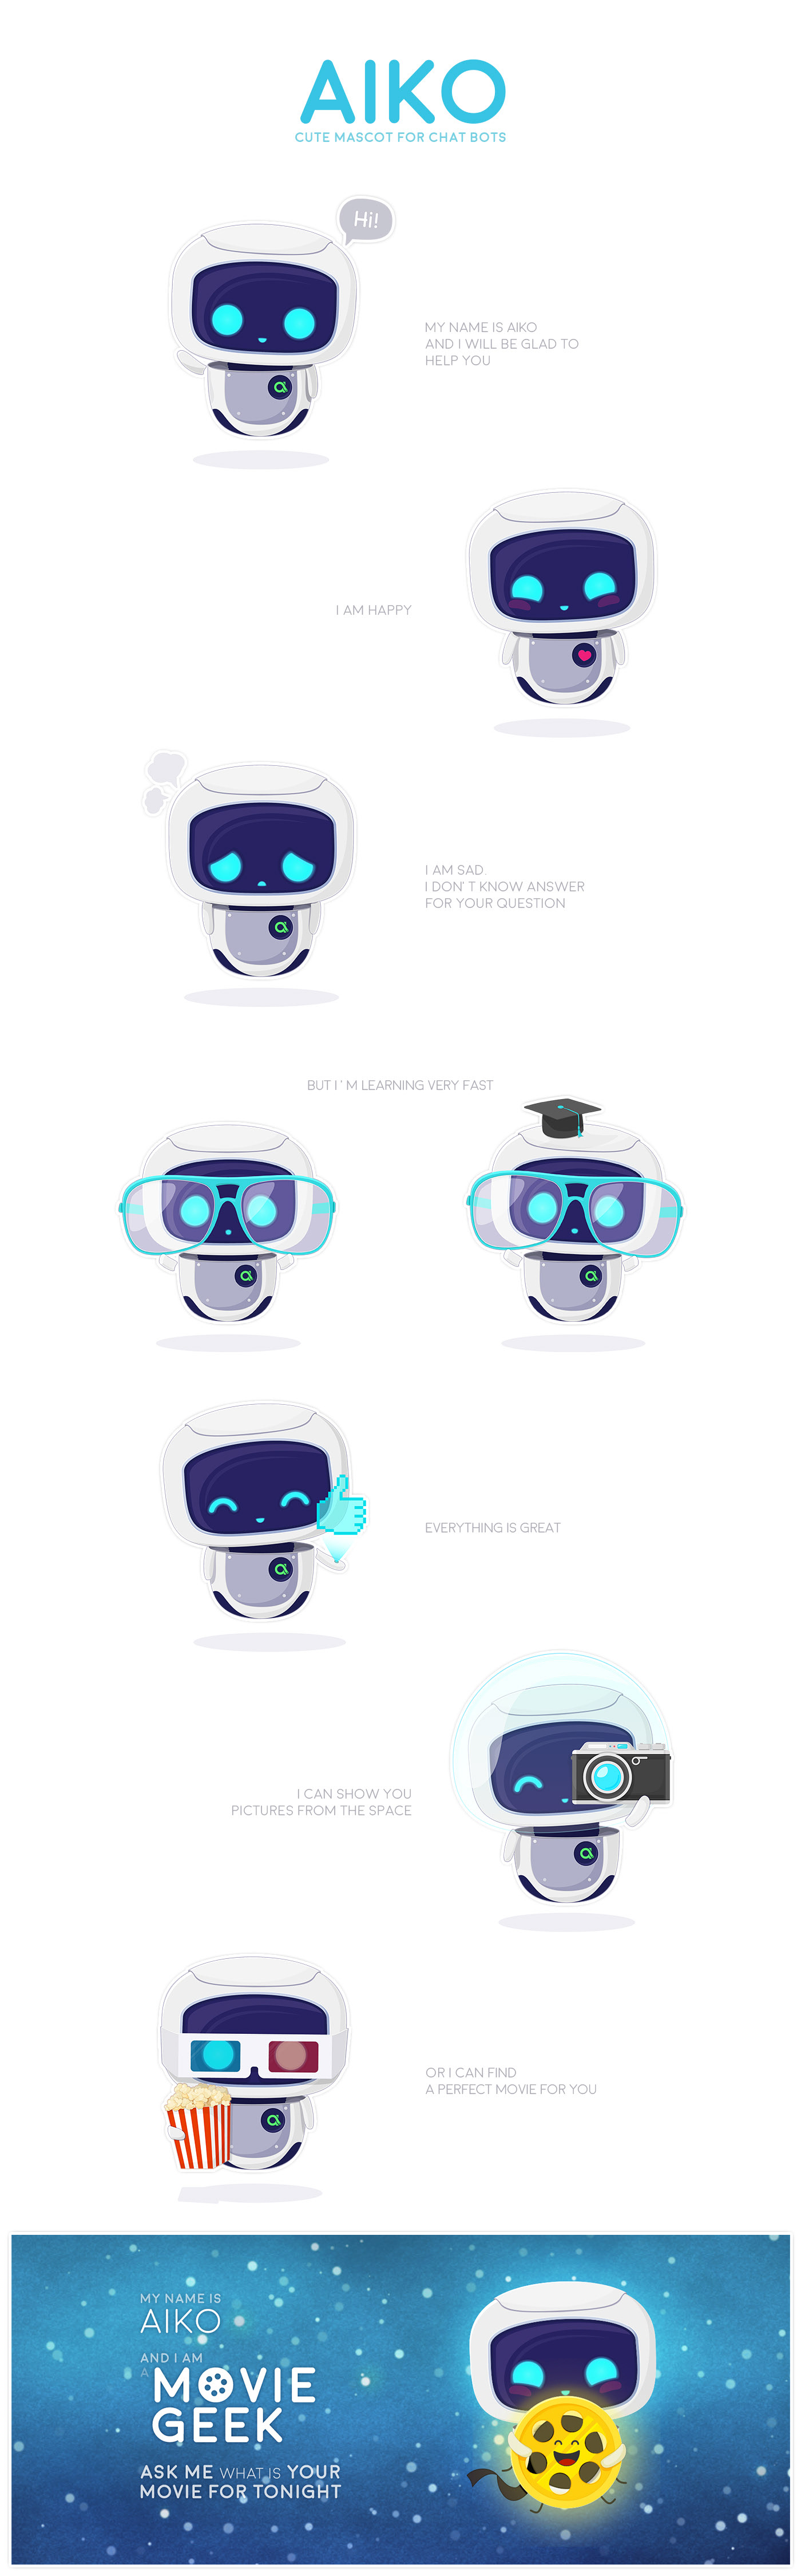 adexin的吉祥物一个可爱的聊天机器人